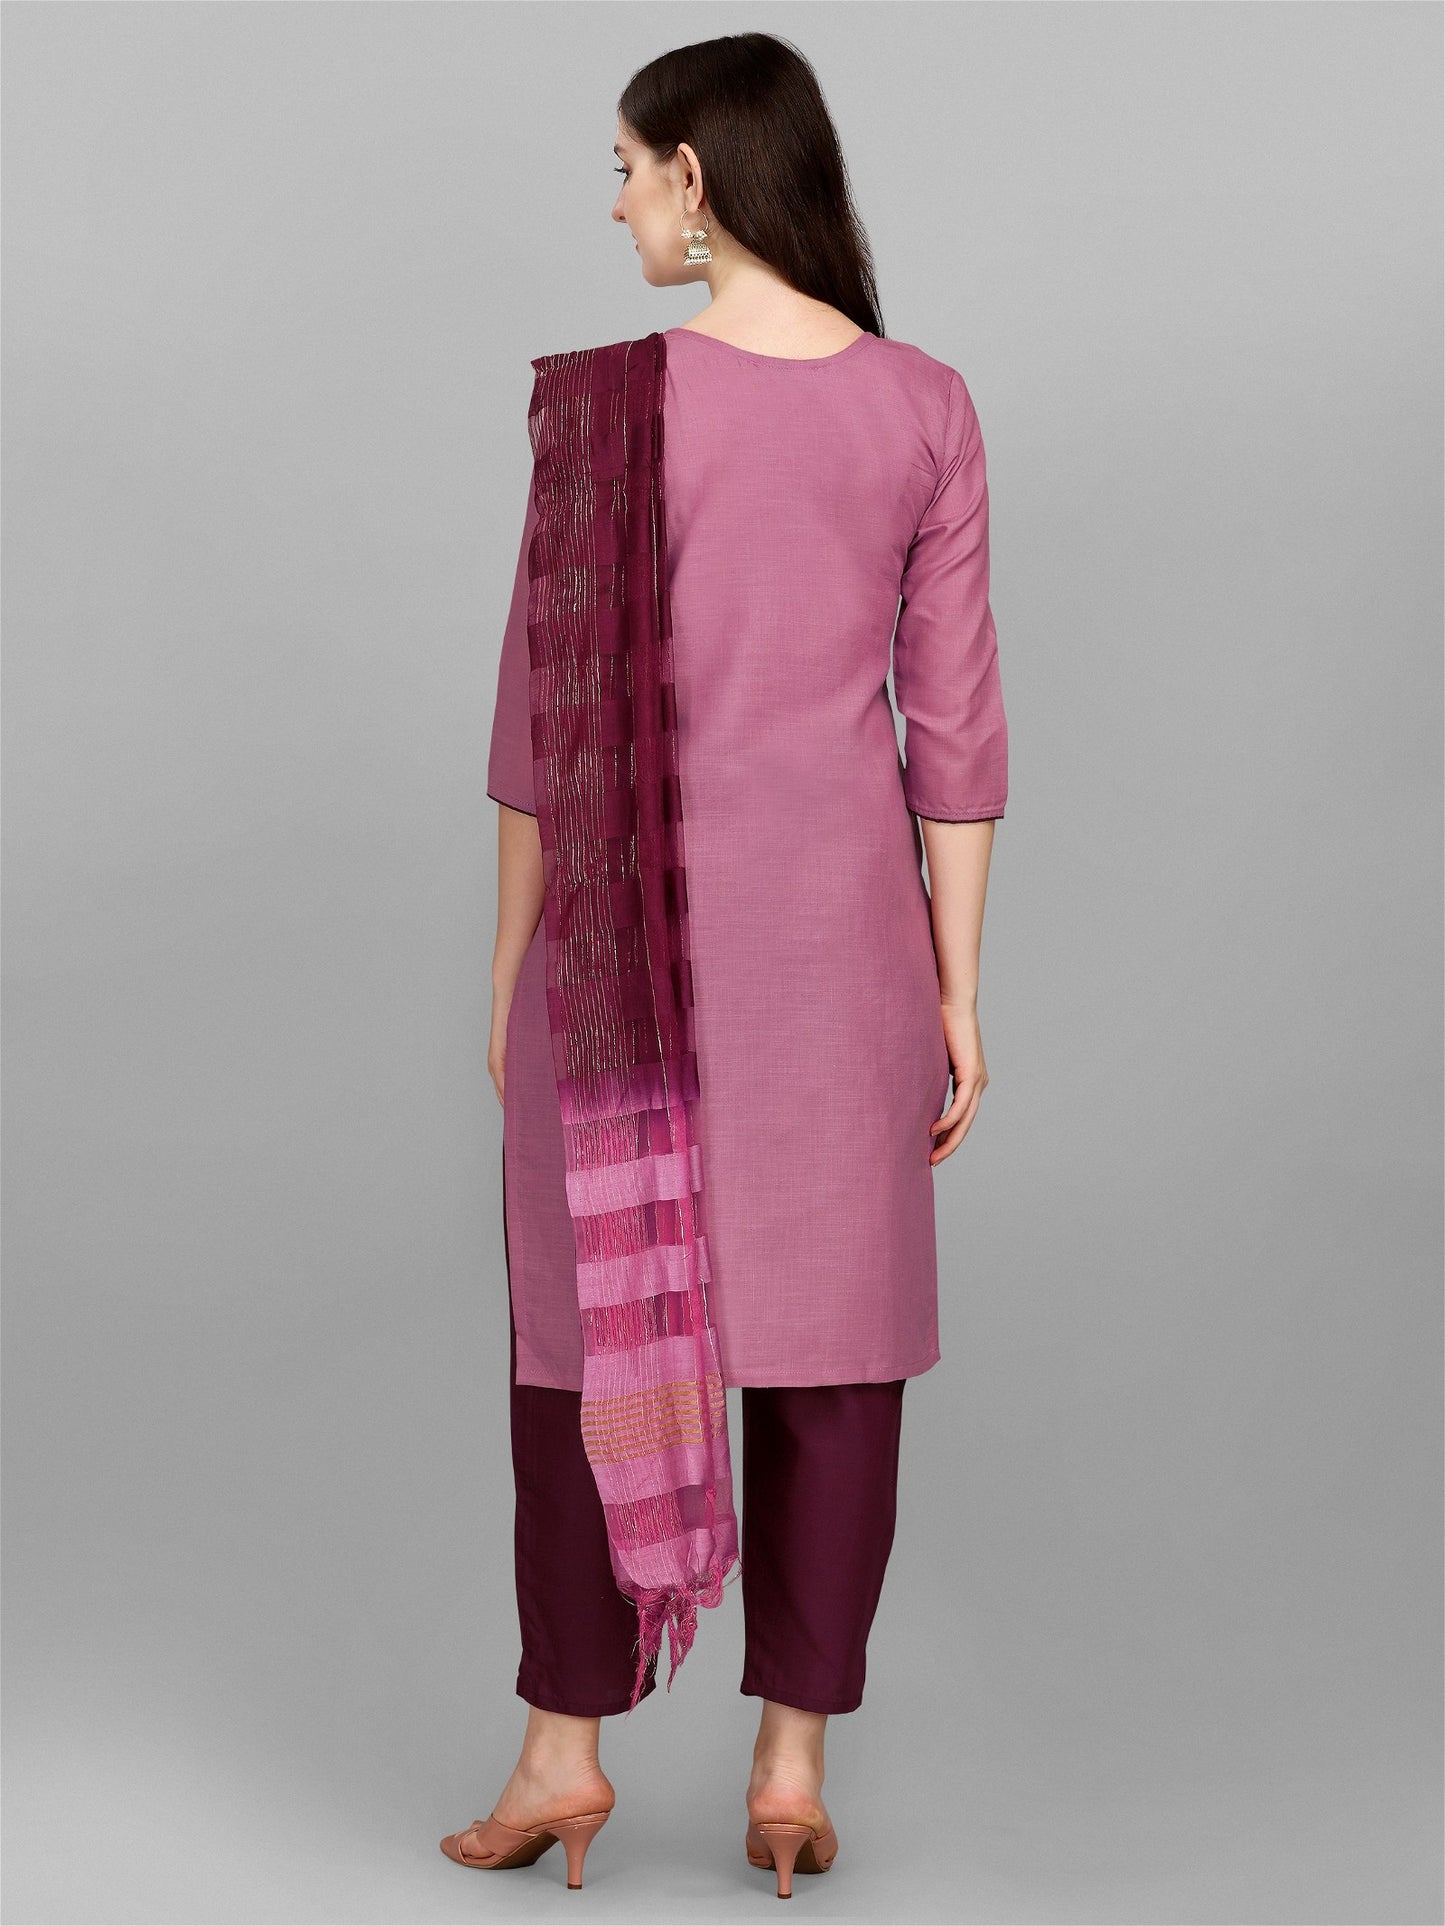 Purple Colour Slub Cotton Embroidery Kurta Pant Dupatta Set For Women's